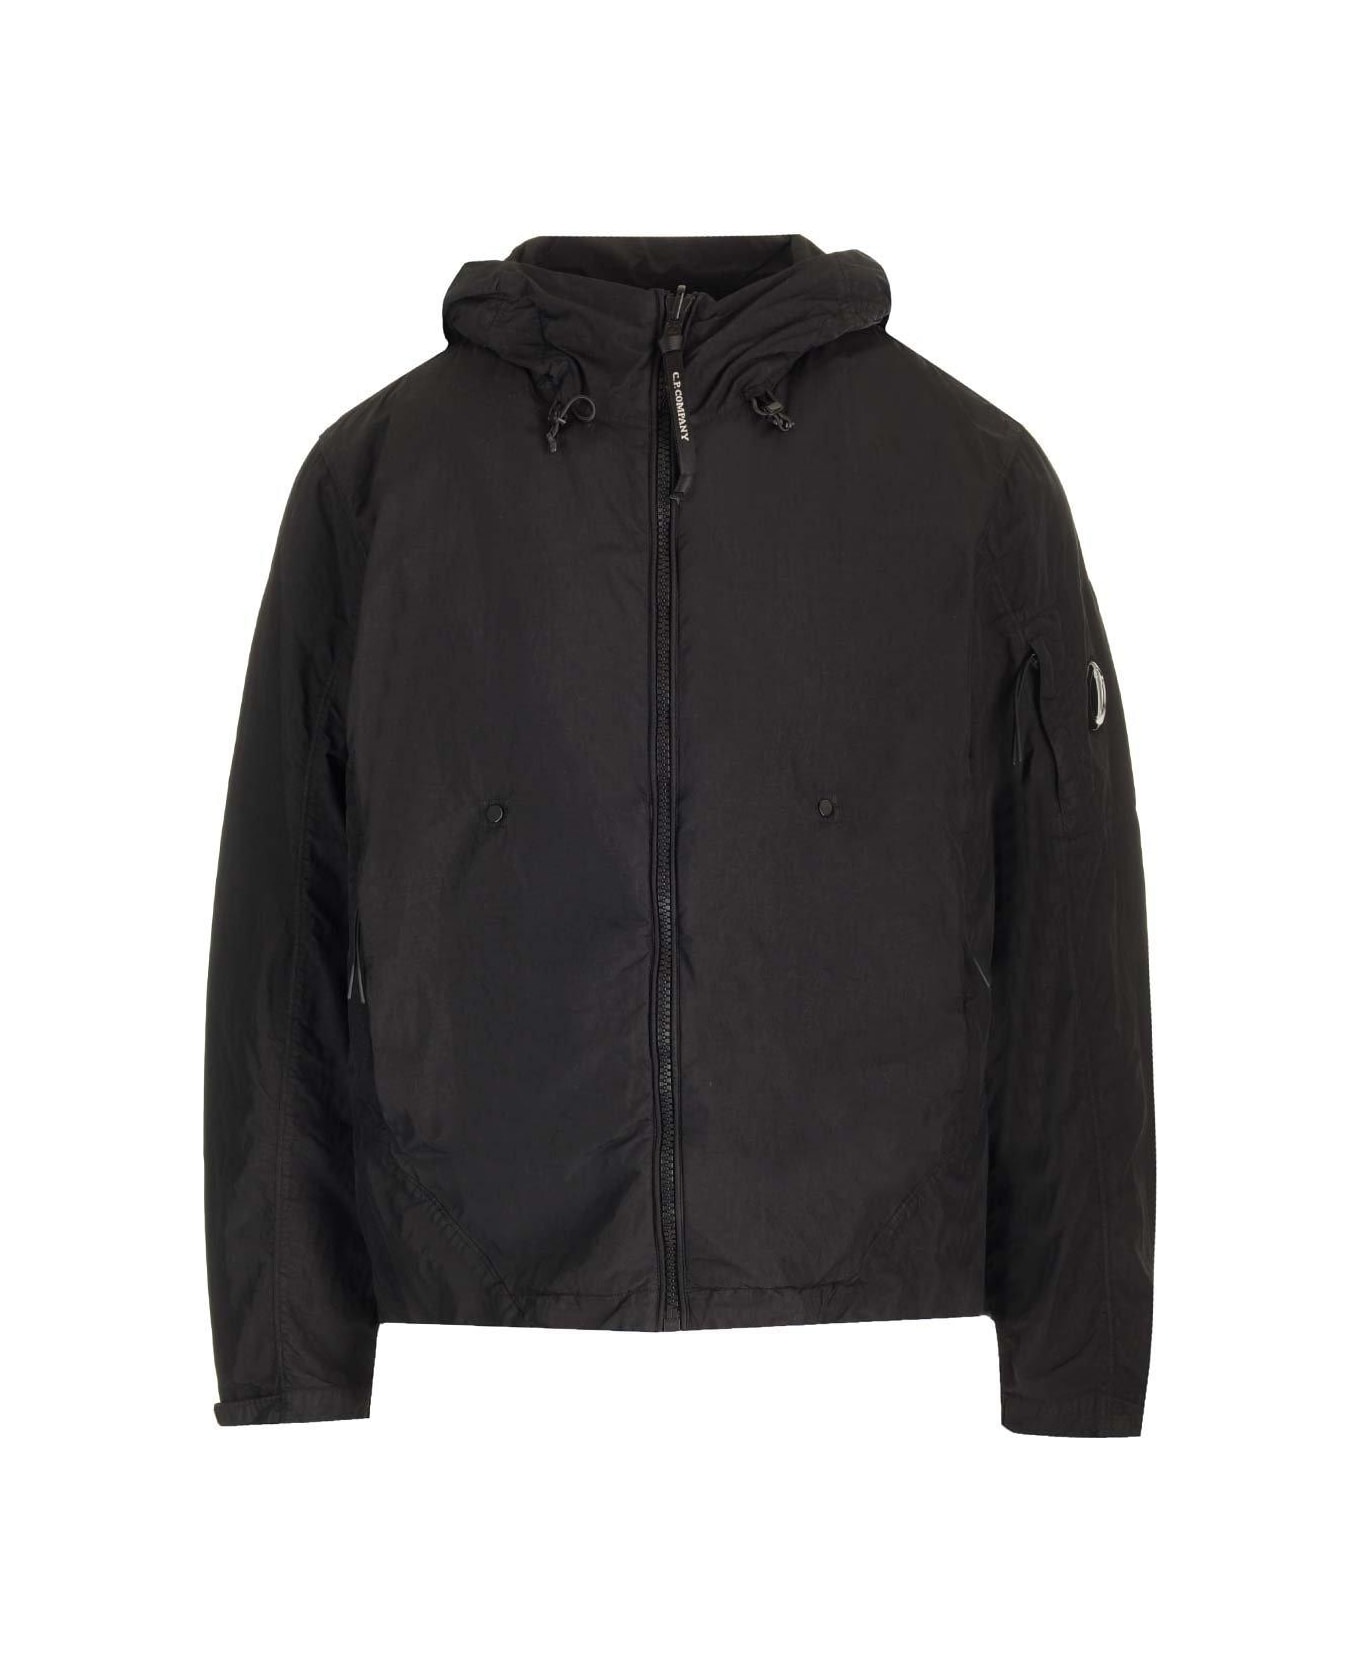 C.P. Company Reversible Hooded Jacket - Black